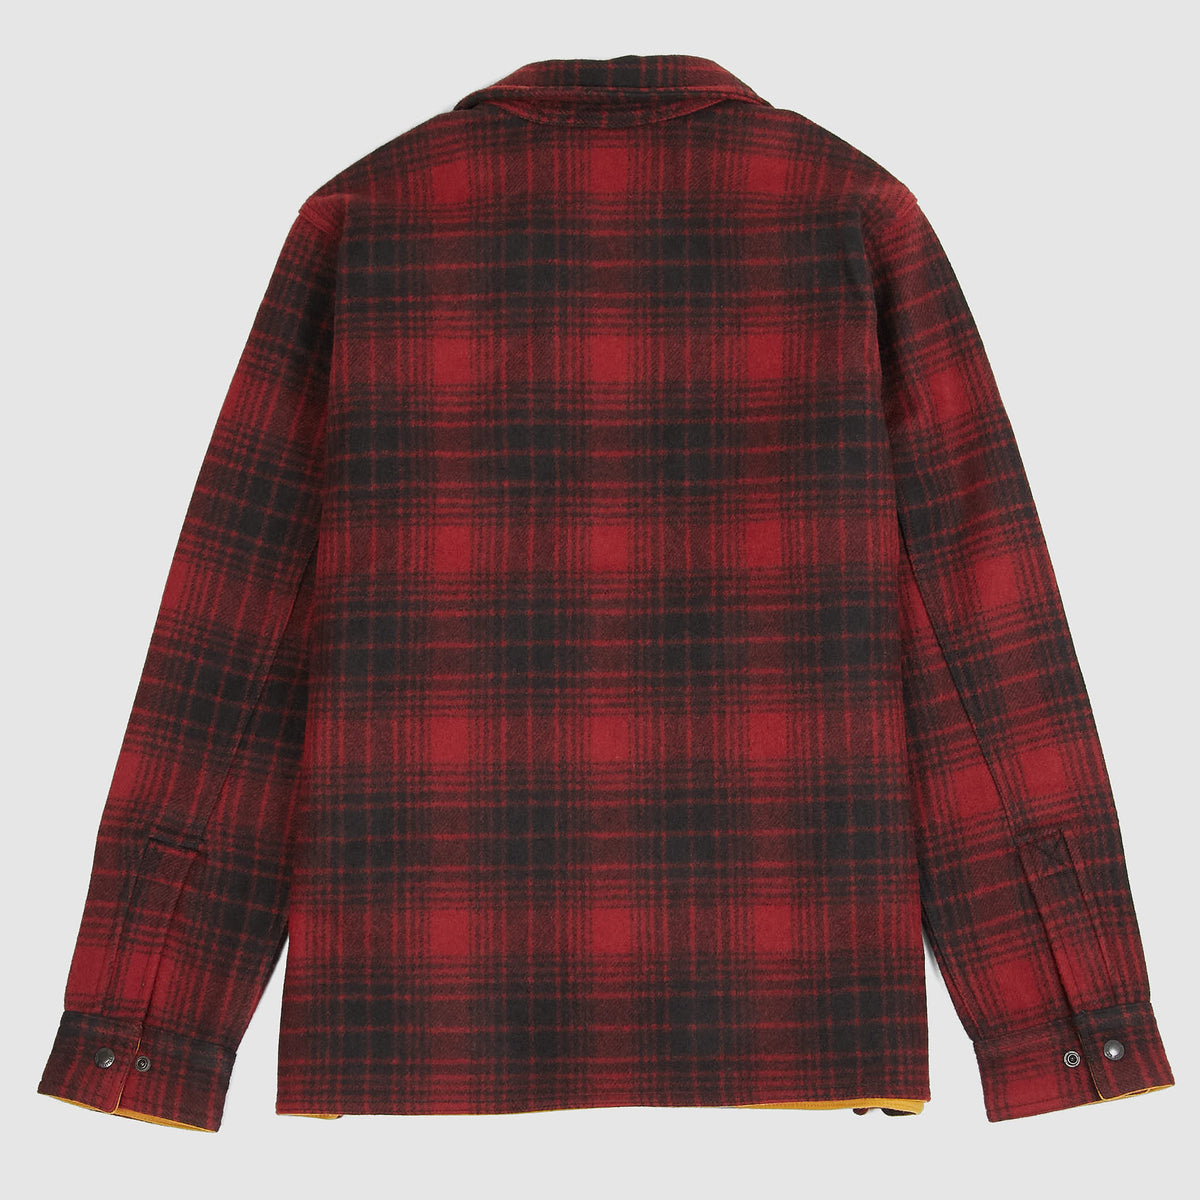 Filson Cotton Lined Wool Plaid Shirt Jacket